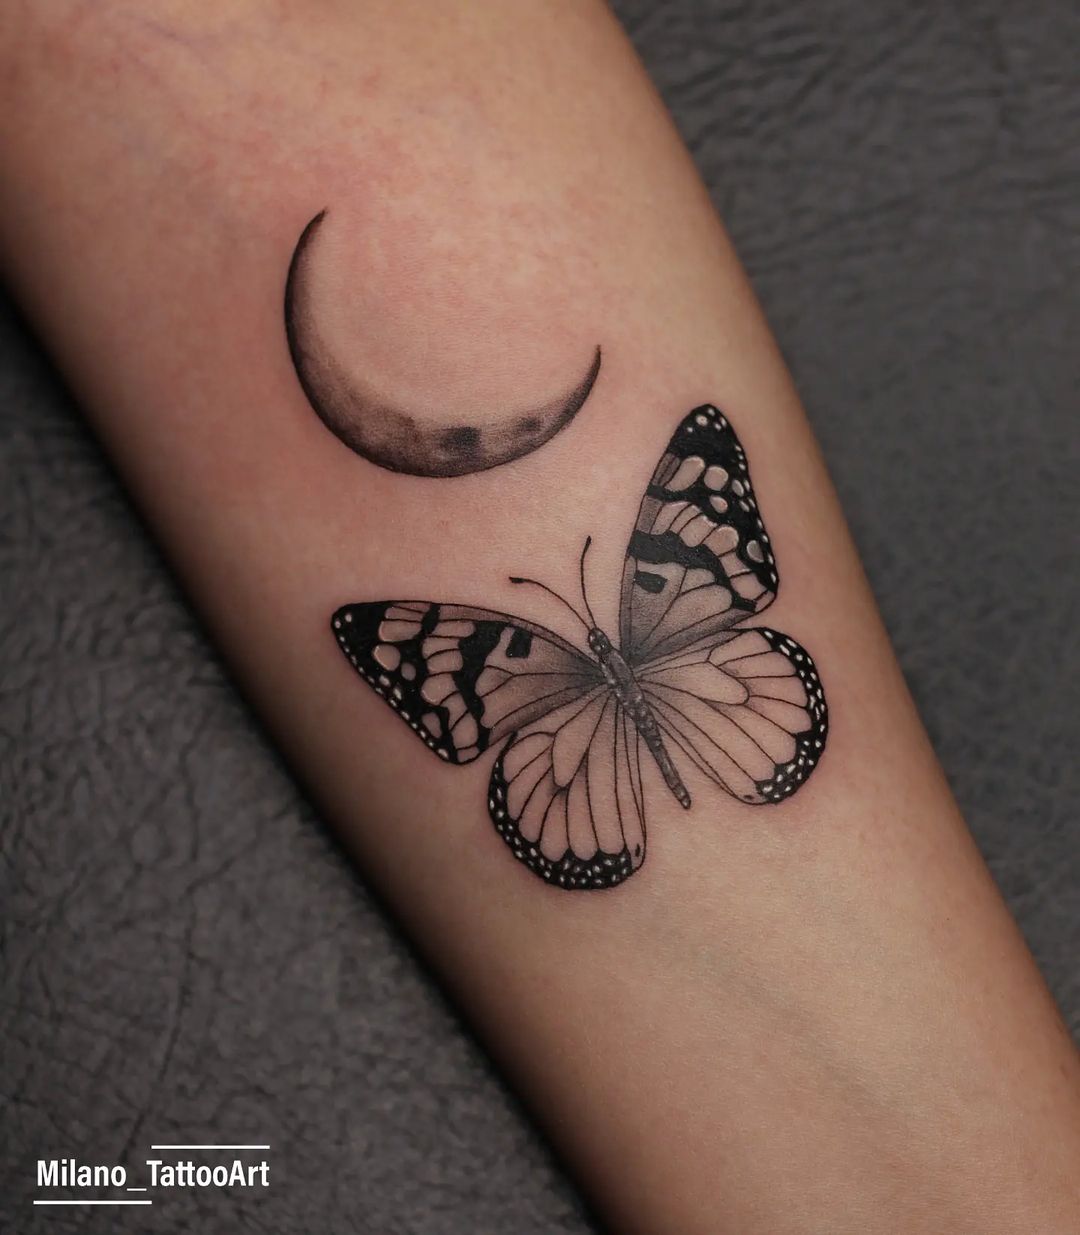 REalistic butterfly tattoos by milano tattooart